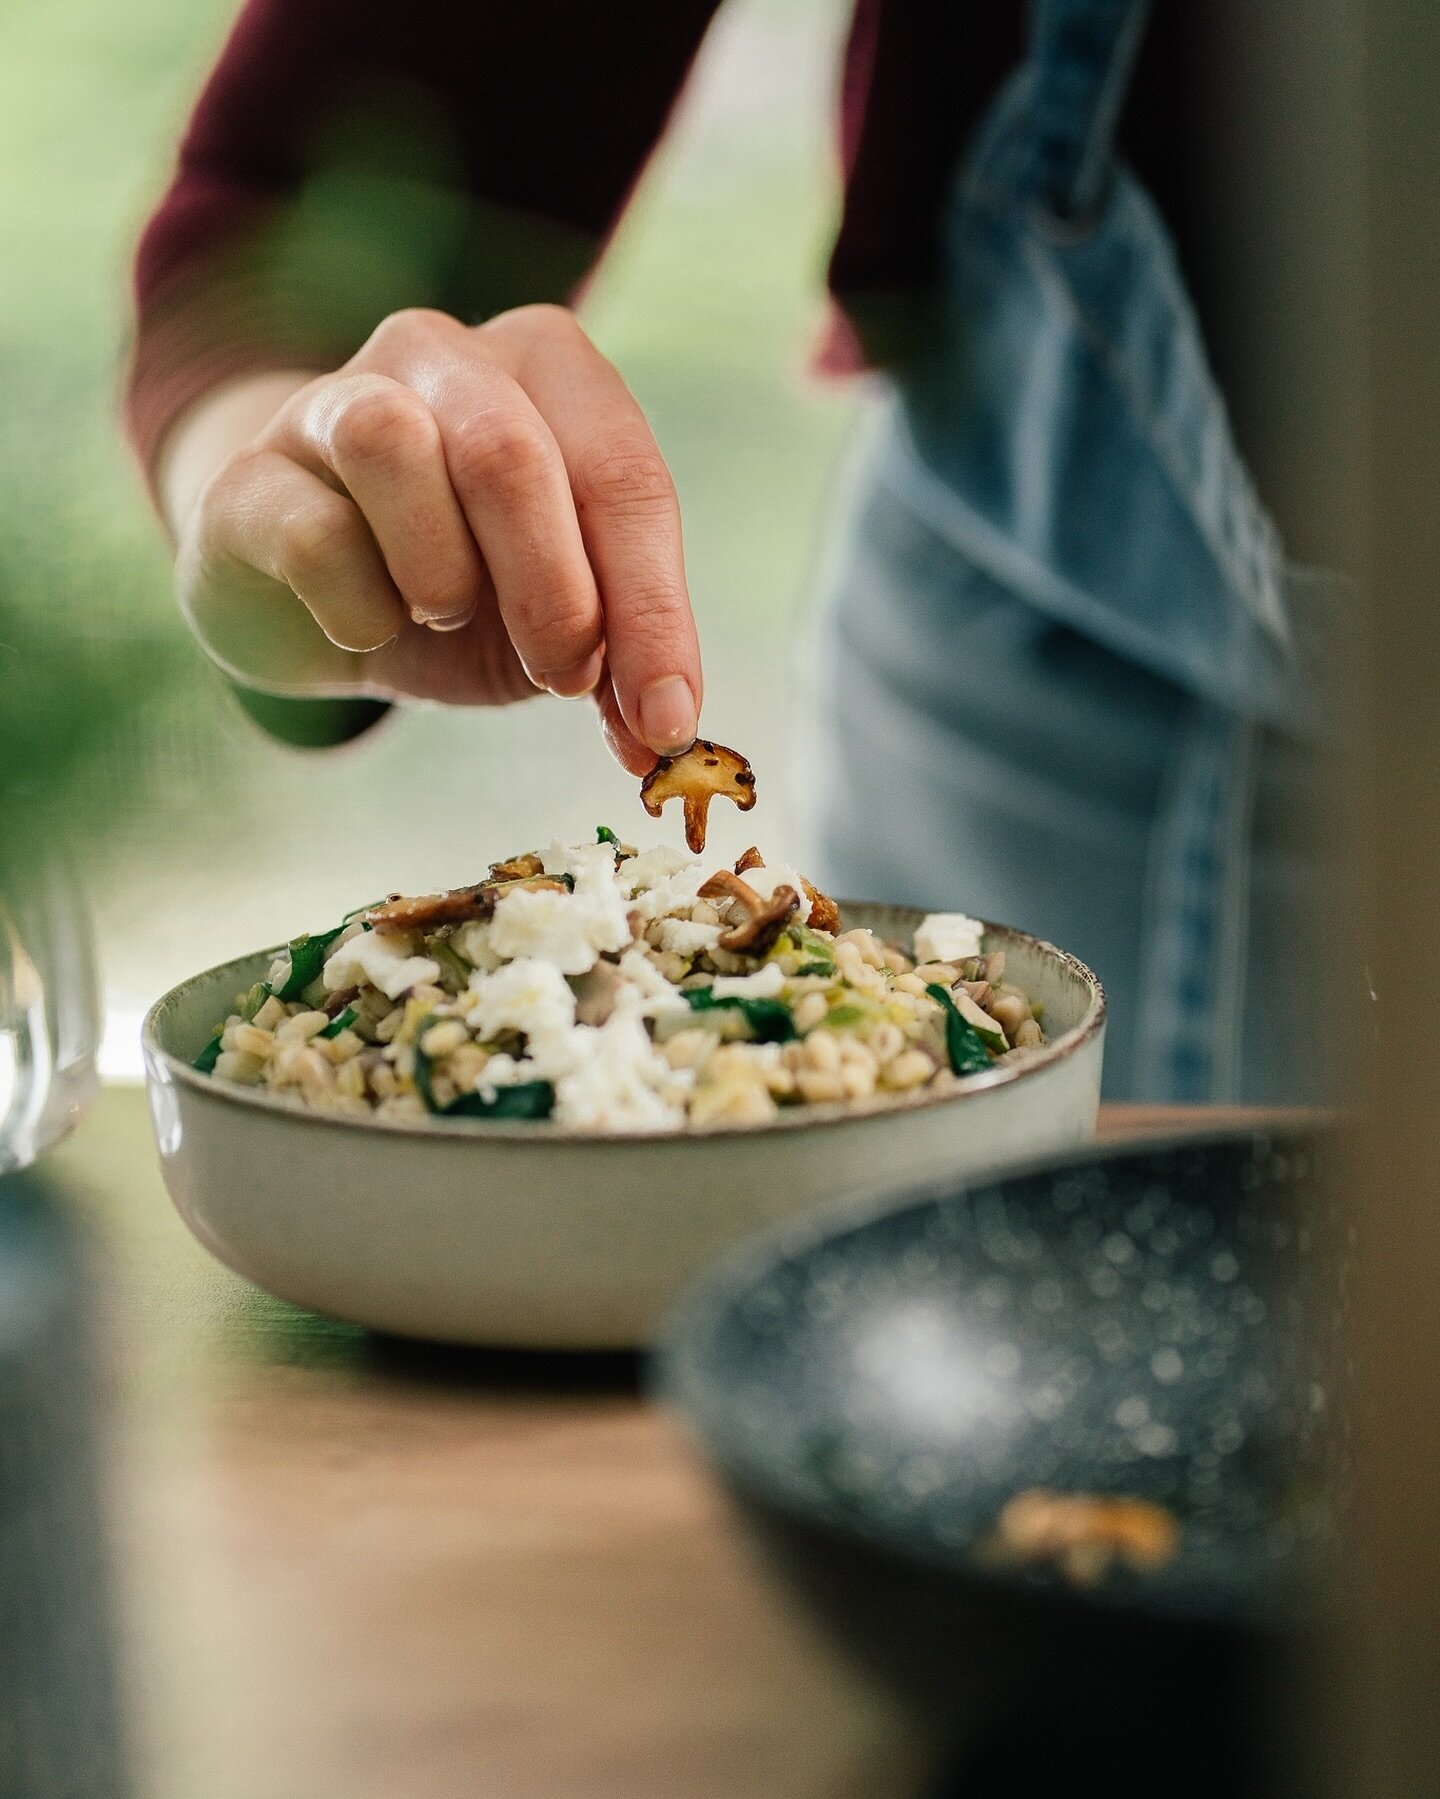 Cooking Mushroom Orsotto ✨ 

&bull; #nourishcookbook #risottolover #seasonaleating #seasonalcookbook #nourishment